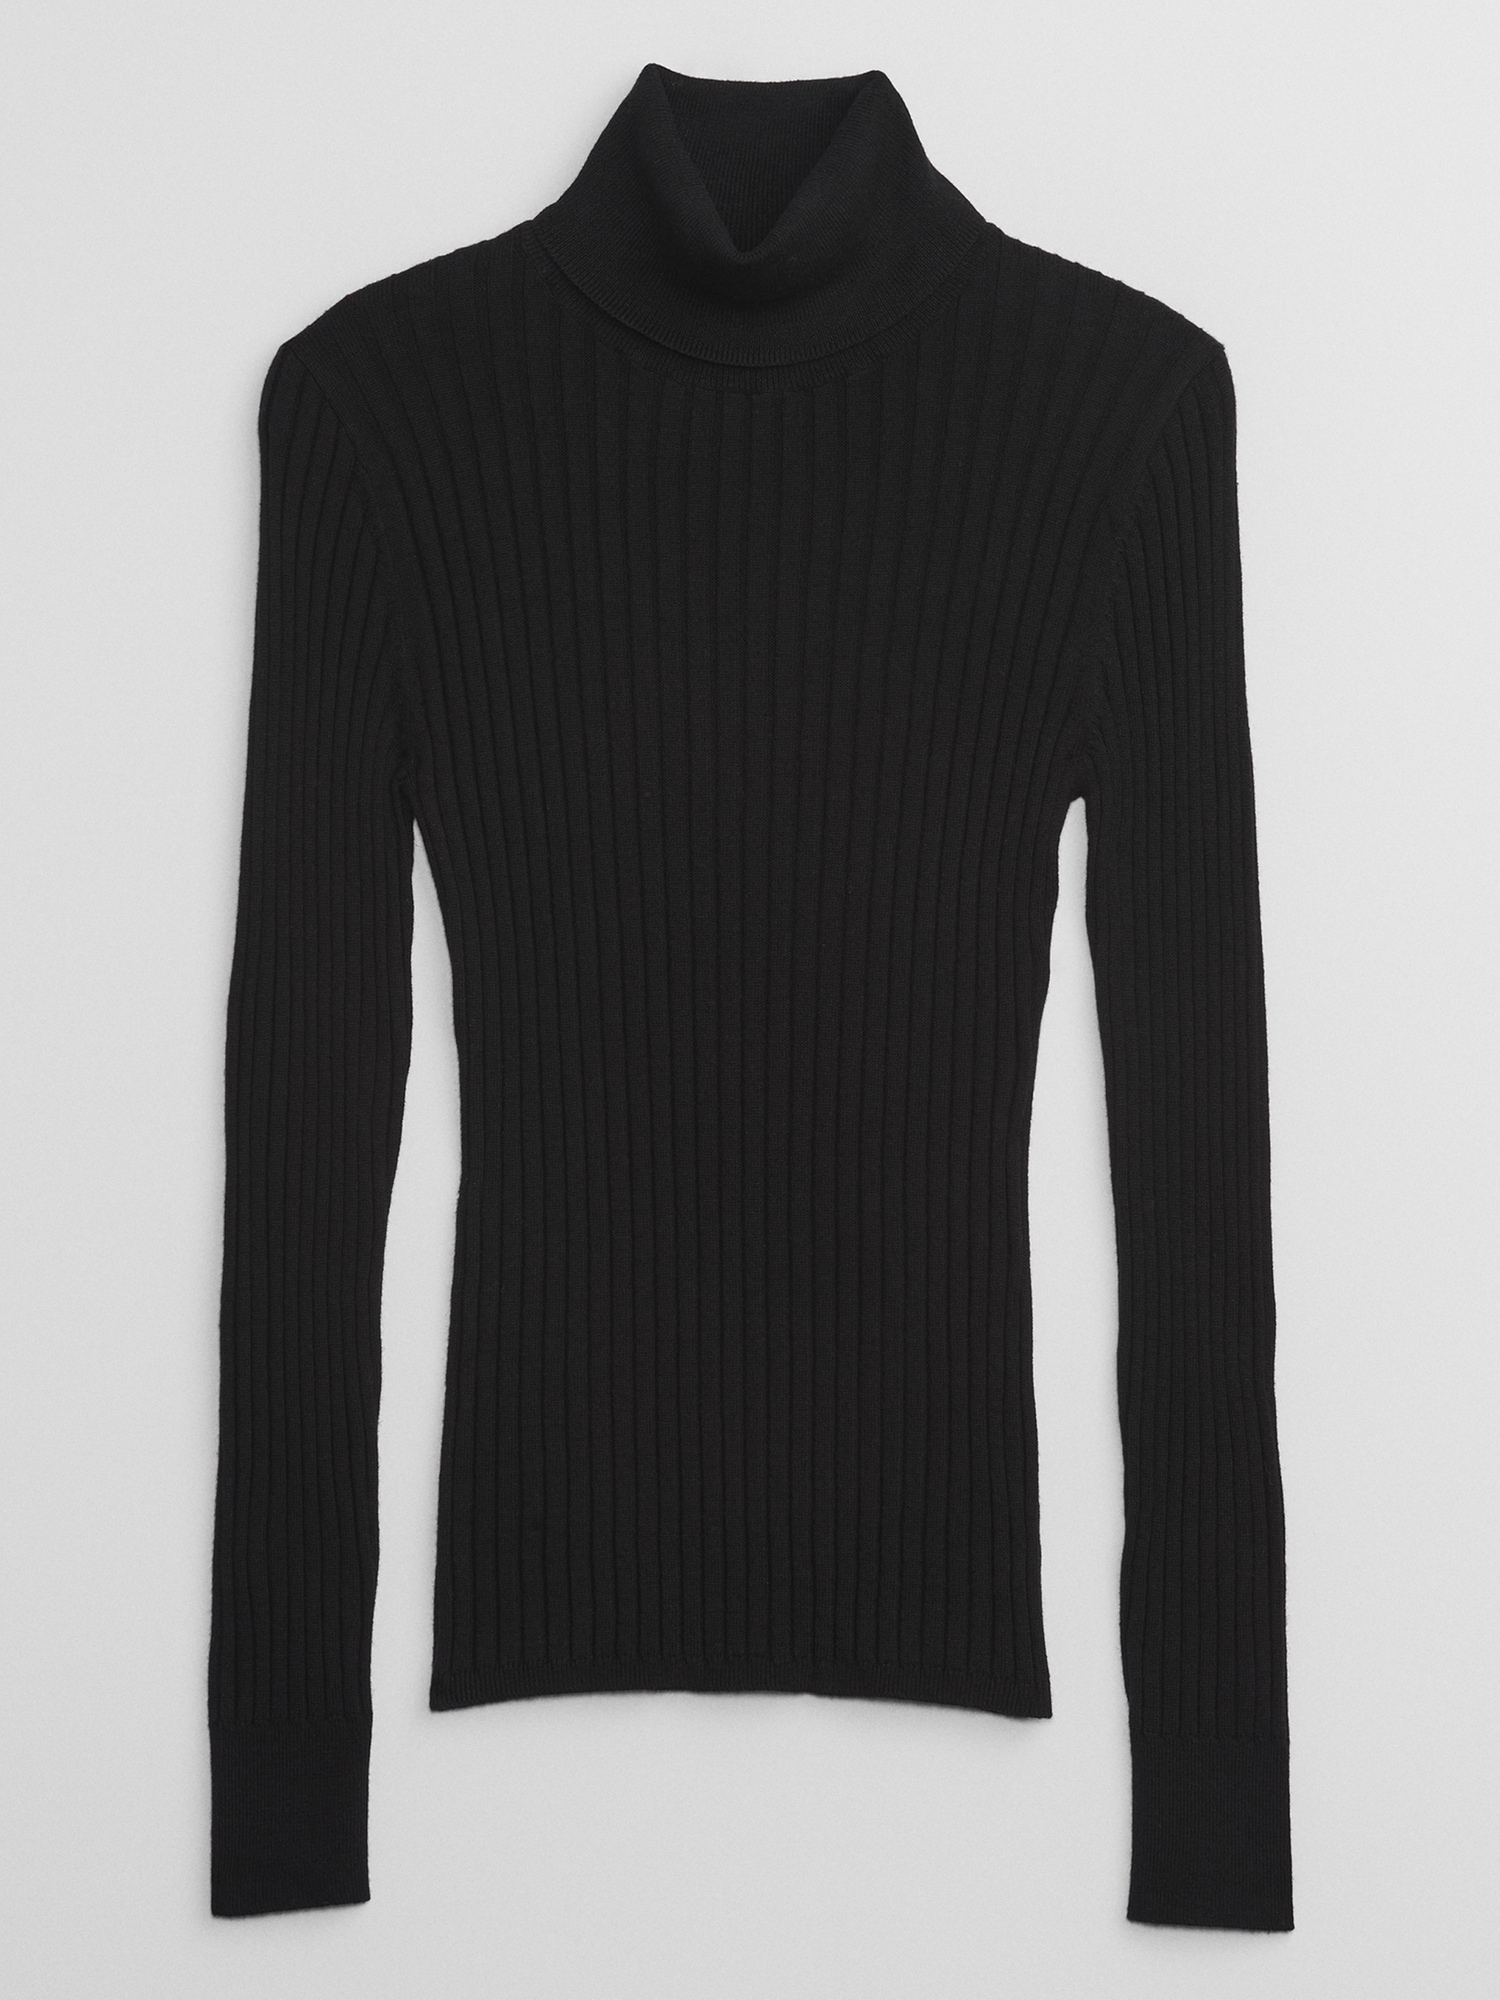 Ribbed Turtleneck Sweater | Gap Factory